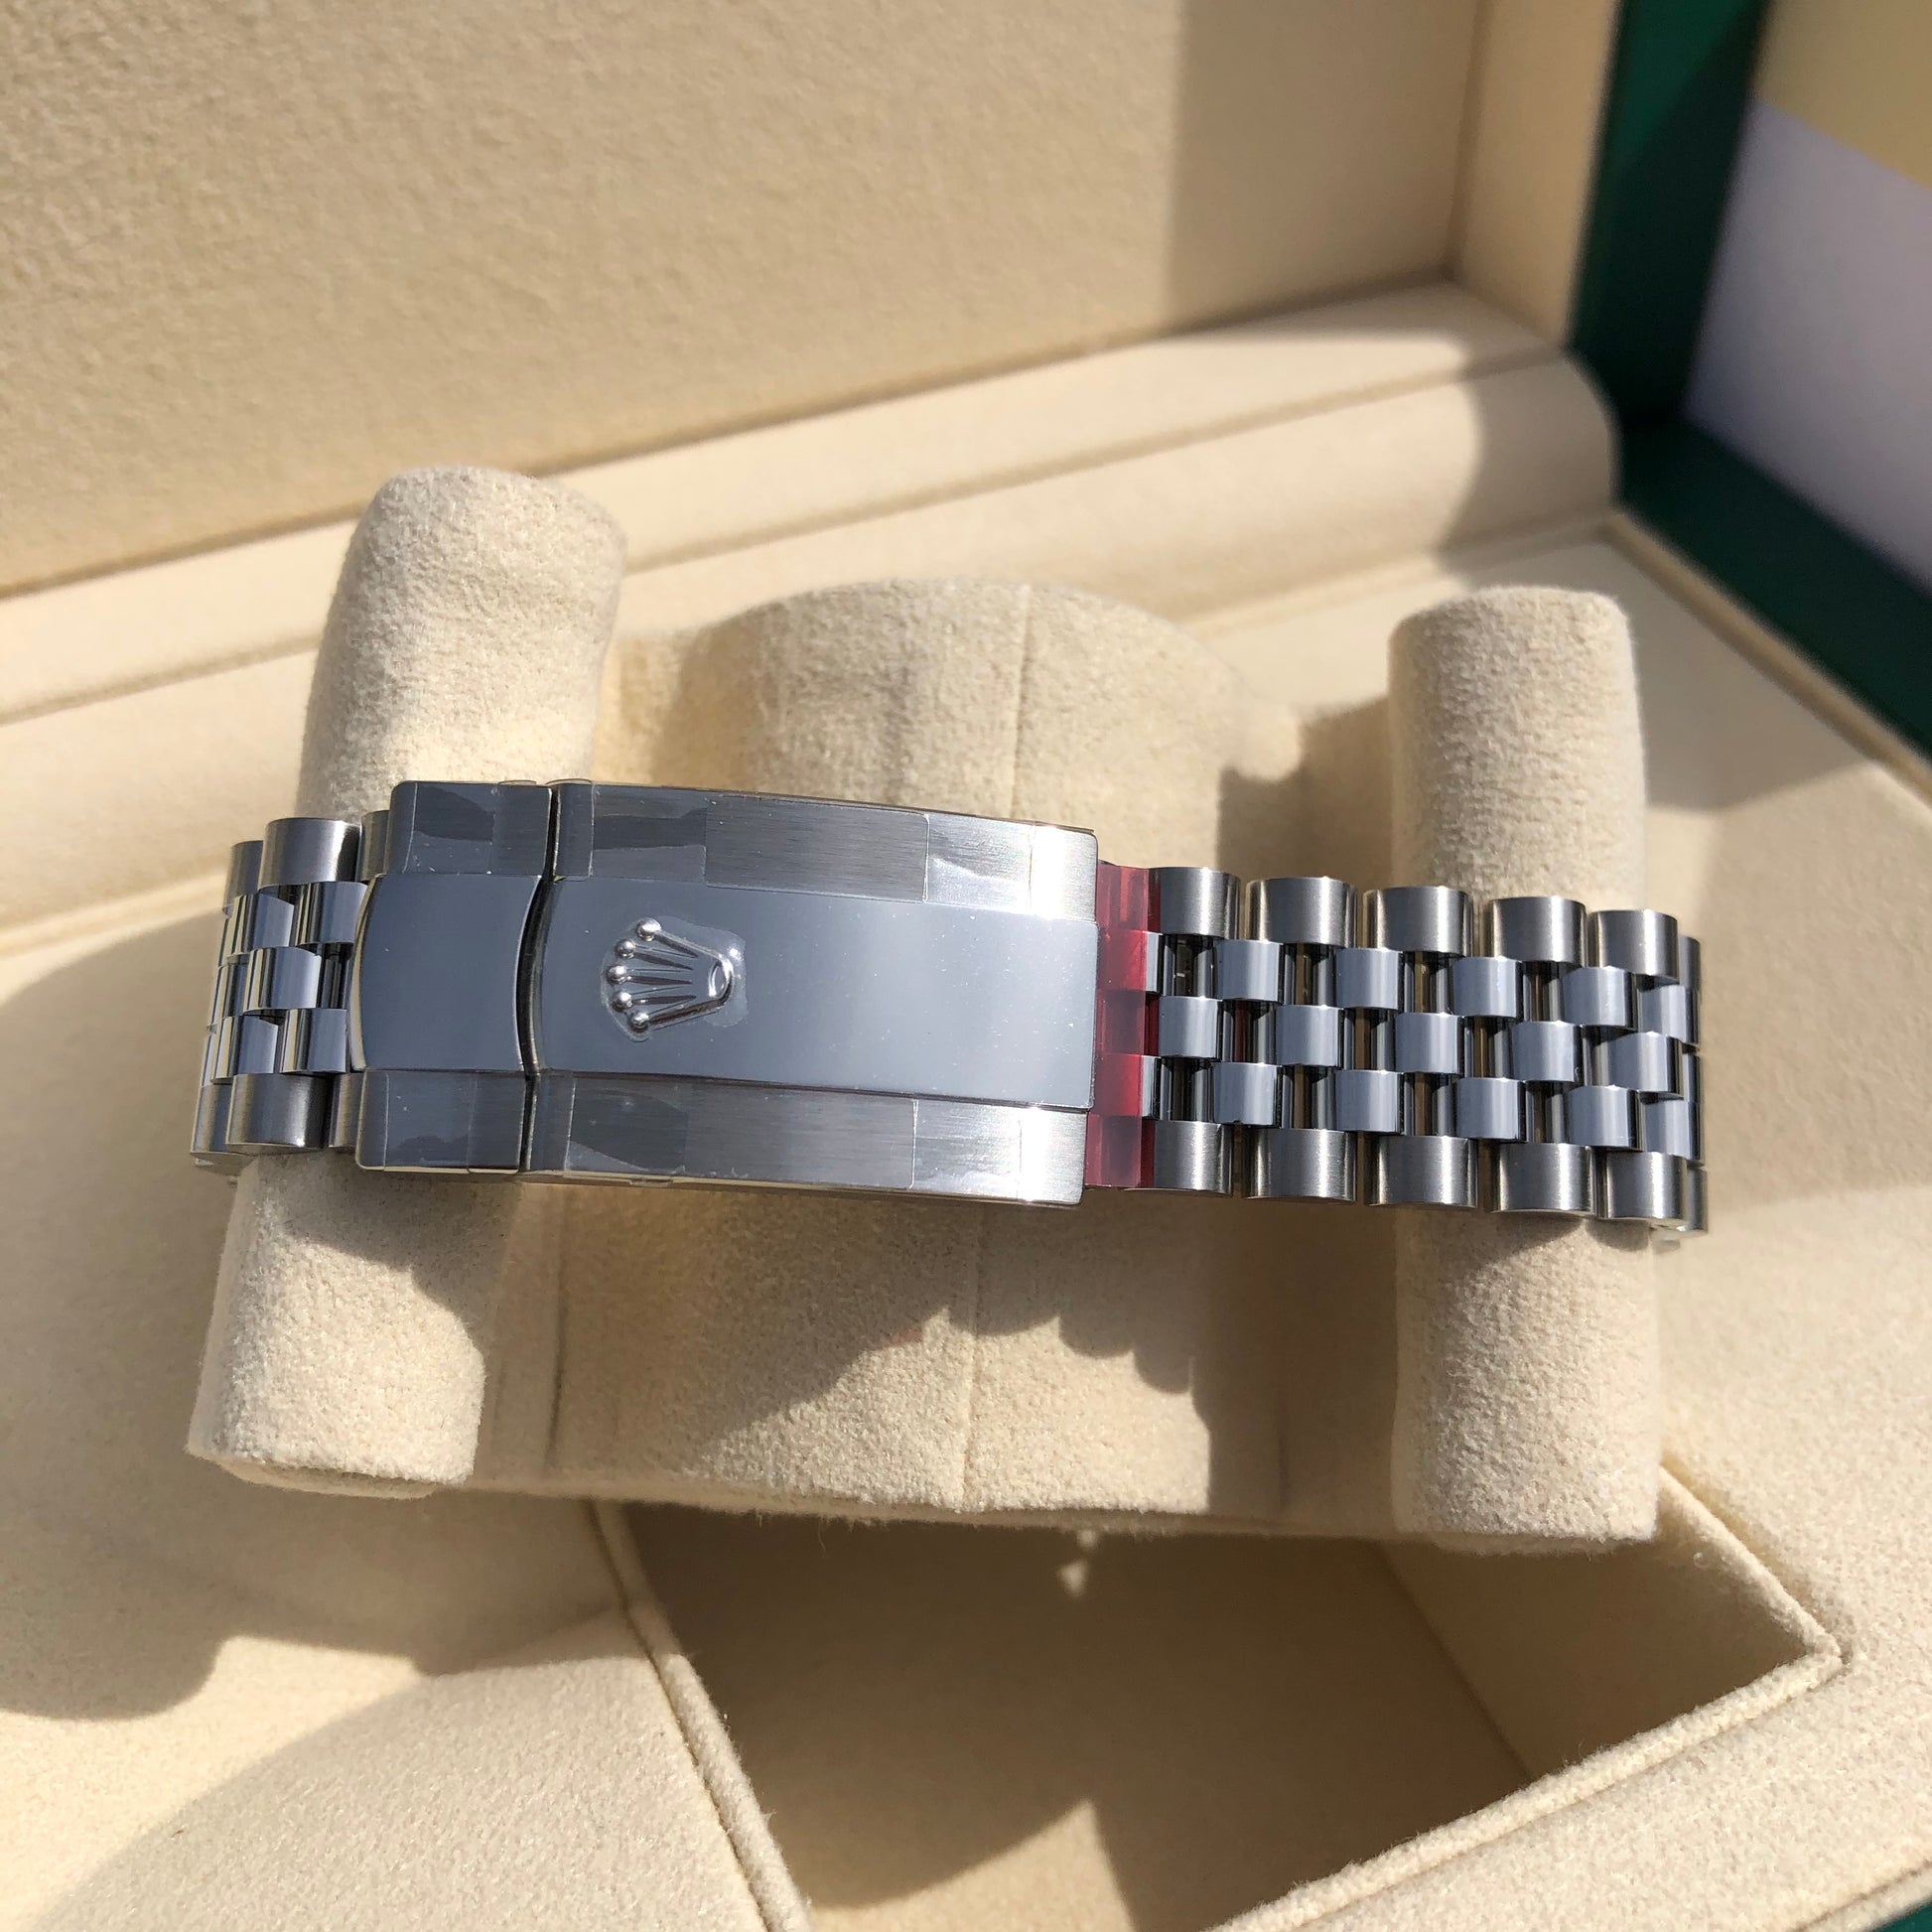 Rolex Datejust 126234 Silver Stick 36mm Jubilee Wristwatch Box & Papers New Unworn 2020 - Hashtag Watch Company